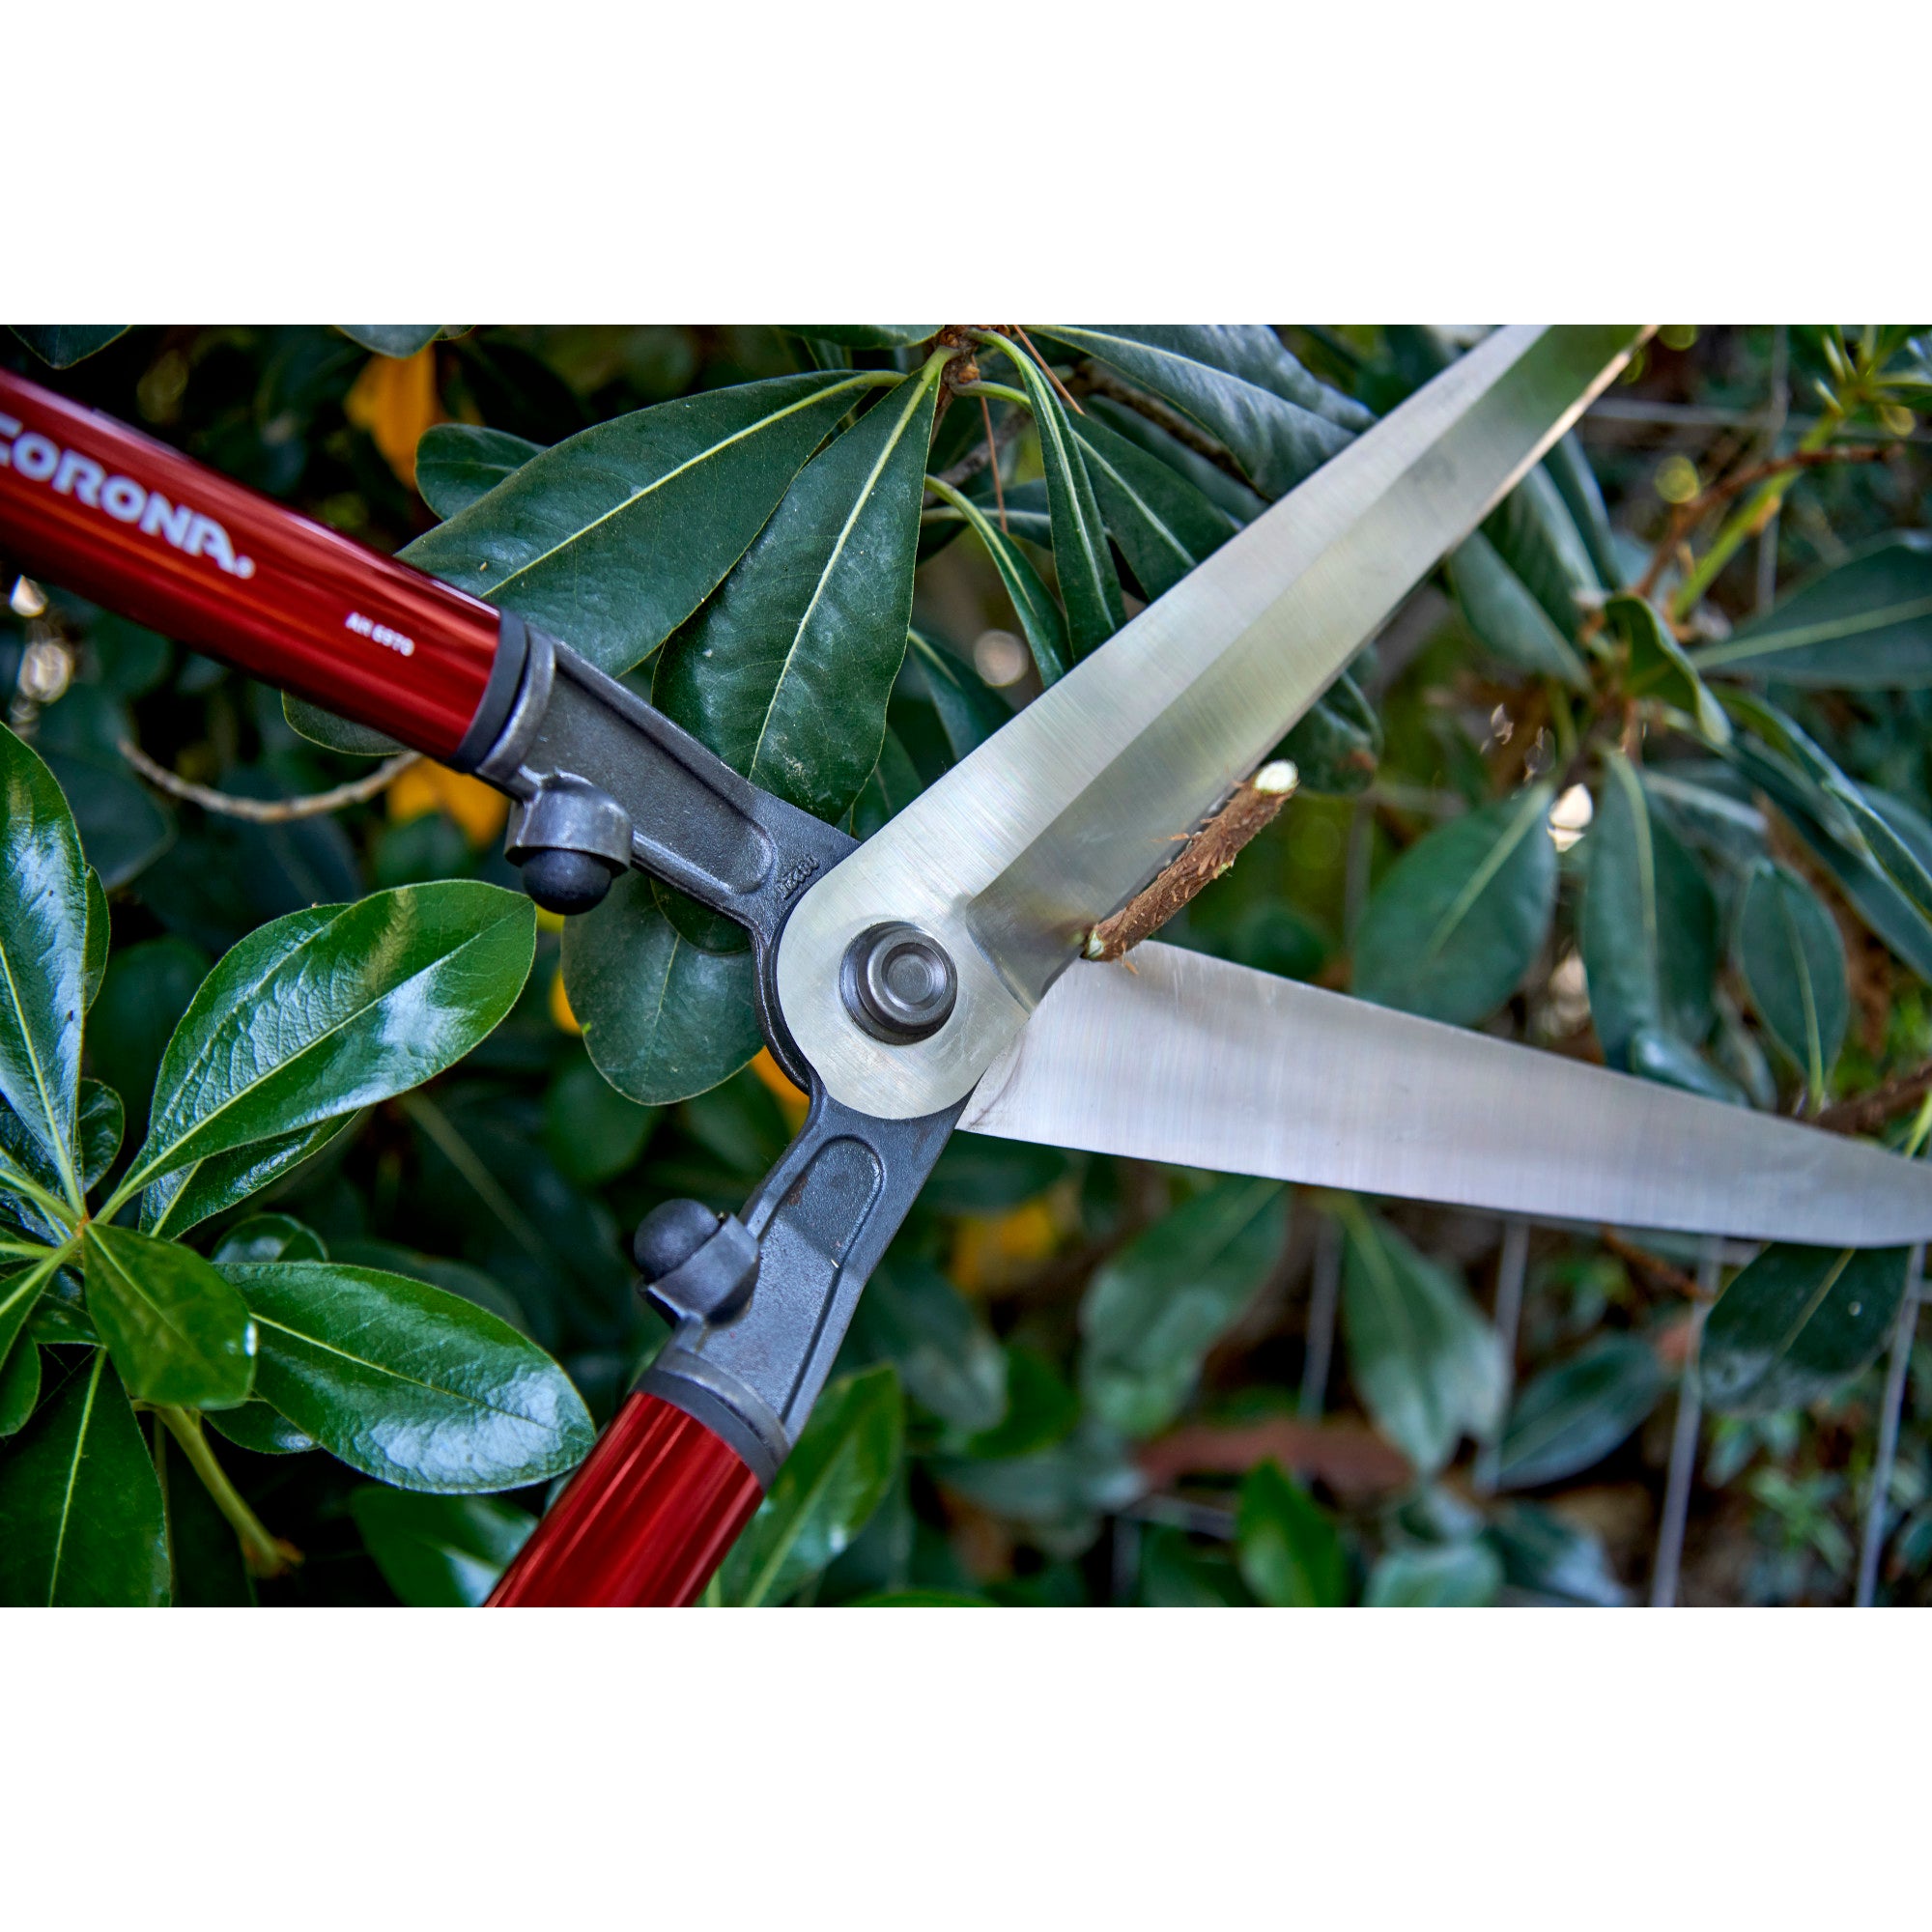 LimbNOTCH Blade Hedge Shears, 10-1/2 in. Blades